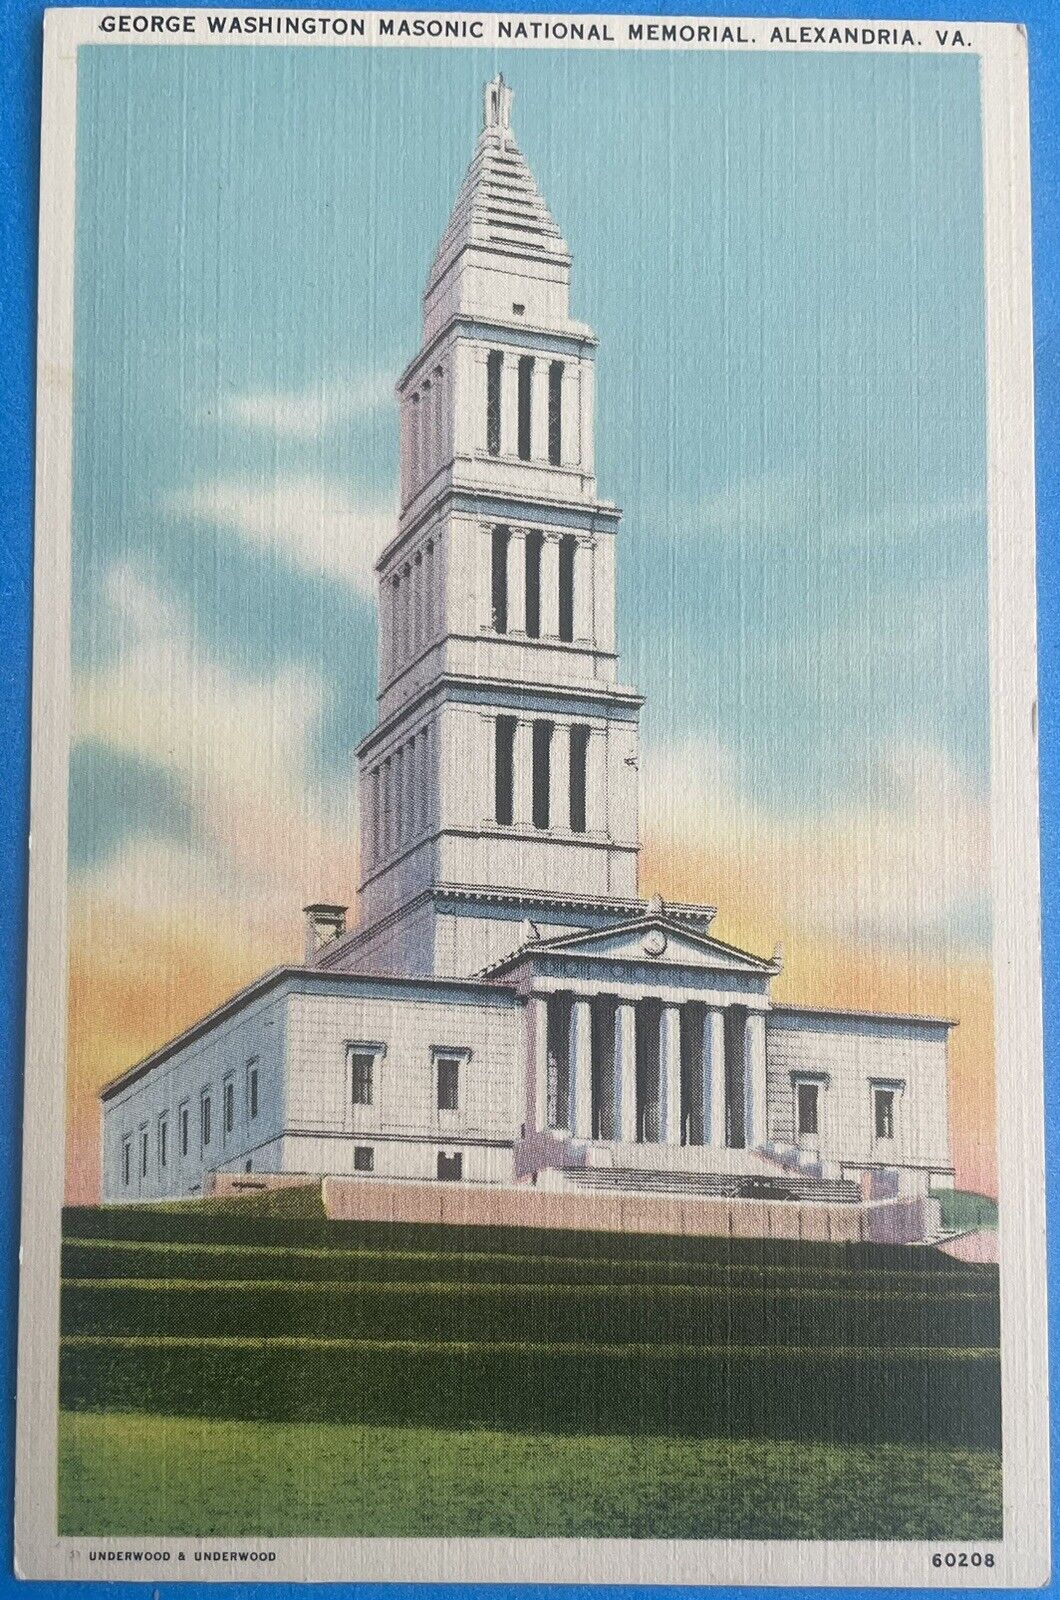 Vintage George Washington Masonic Memorial Postcard - Alexandria VA, Colorchrome